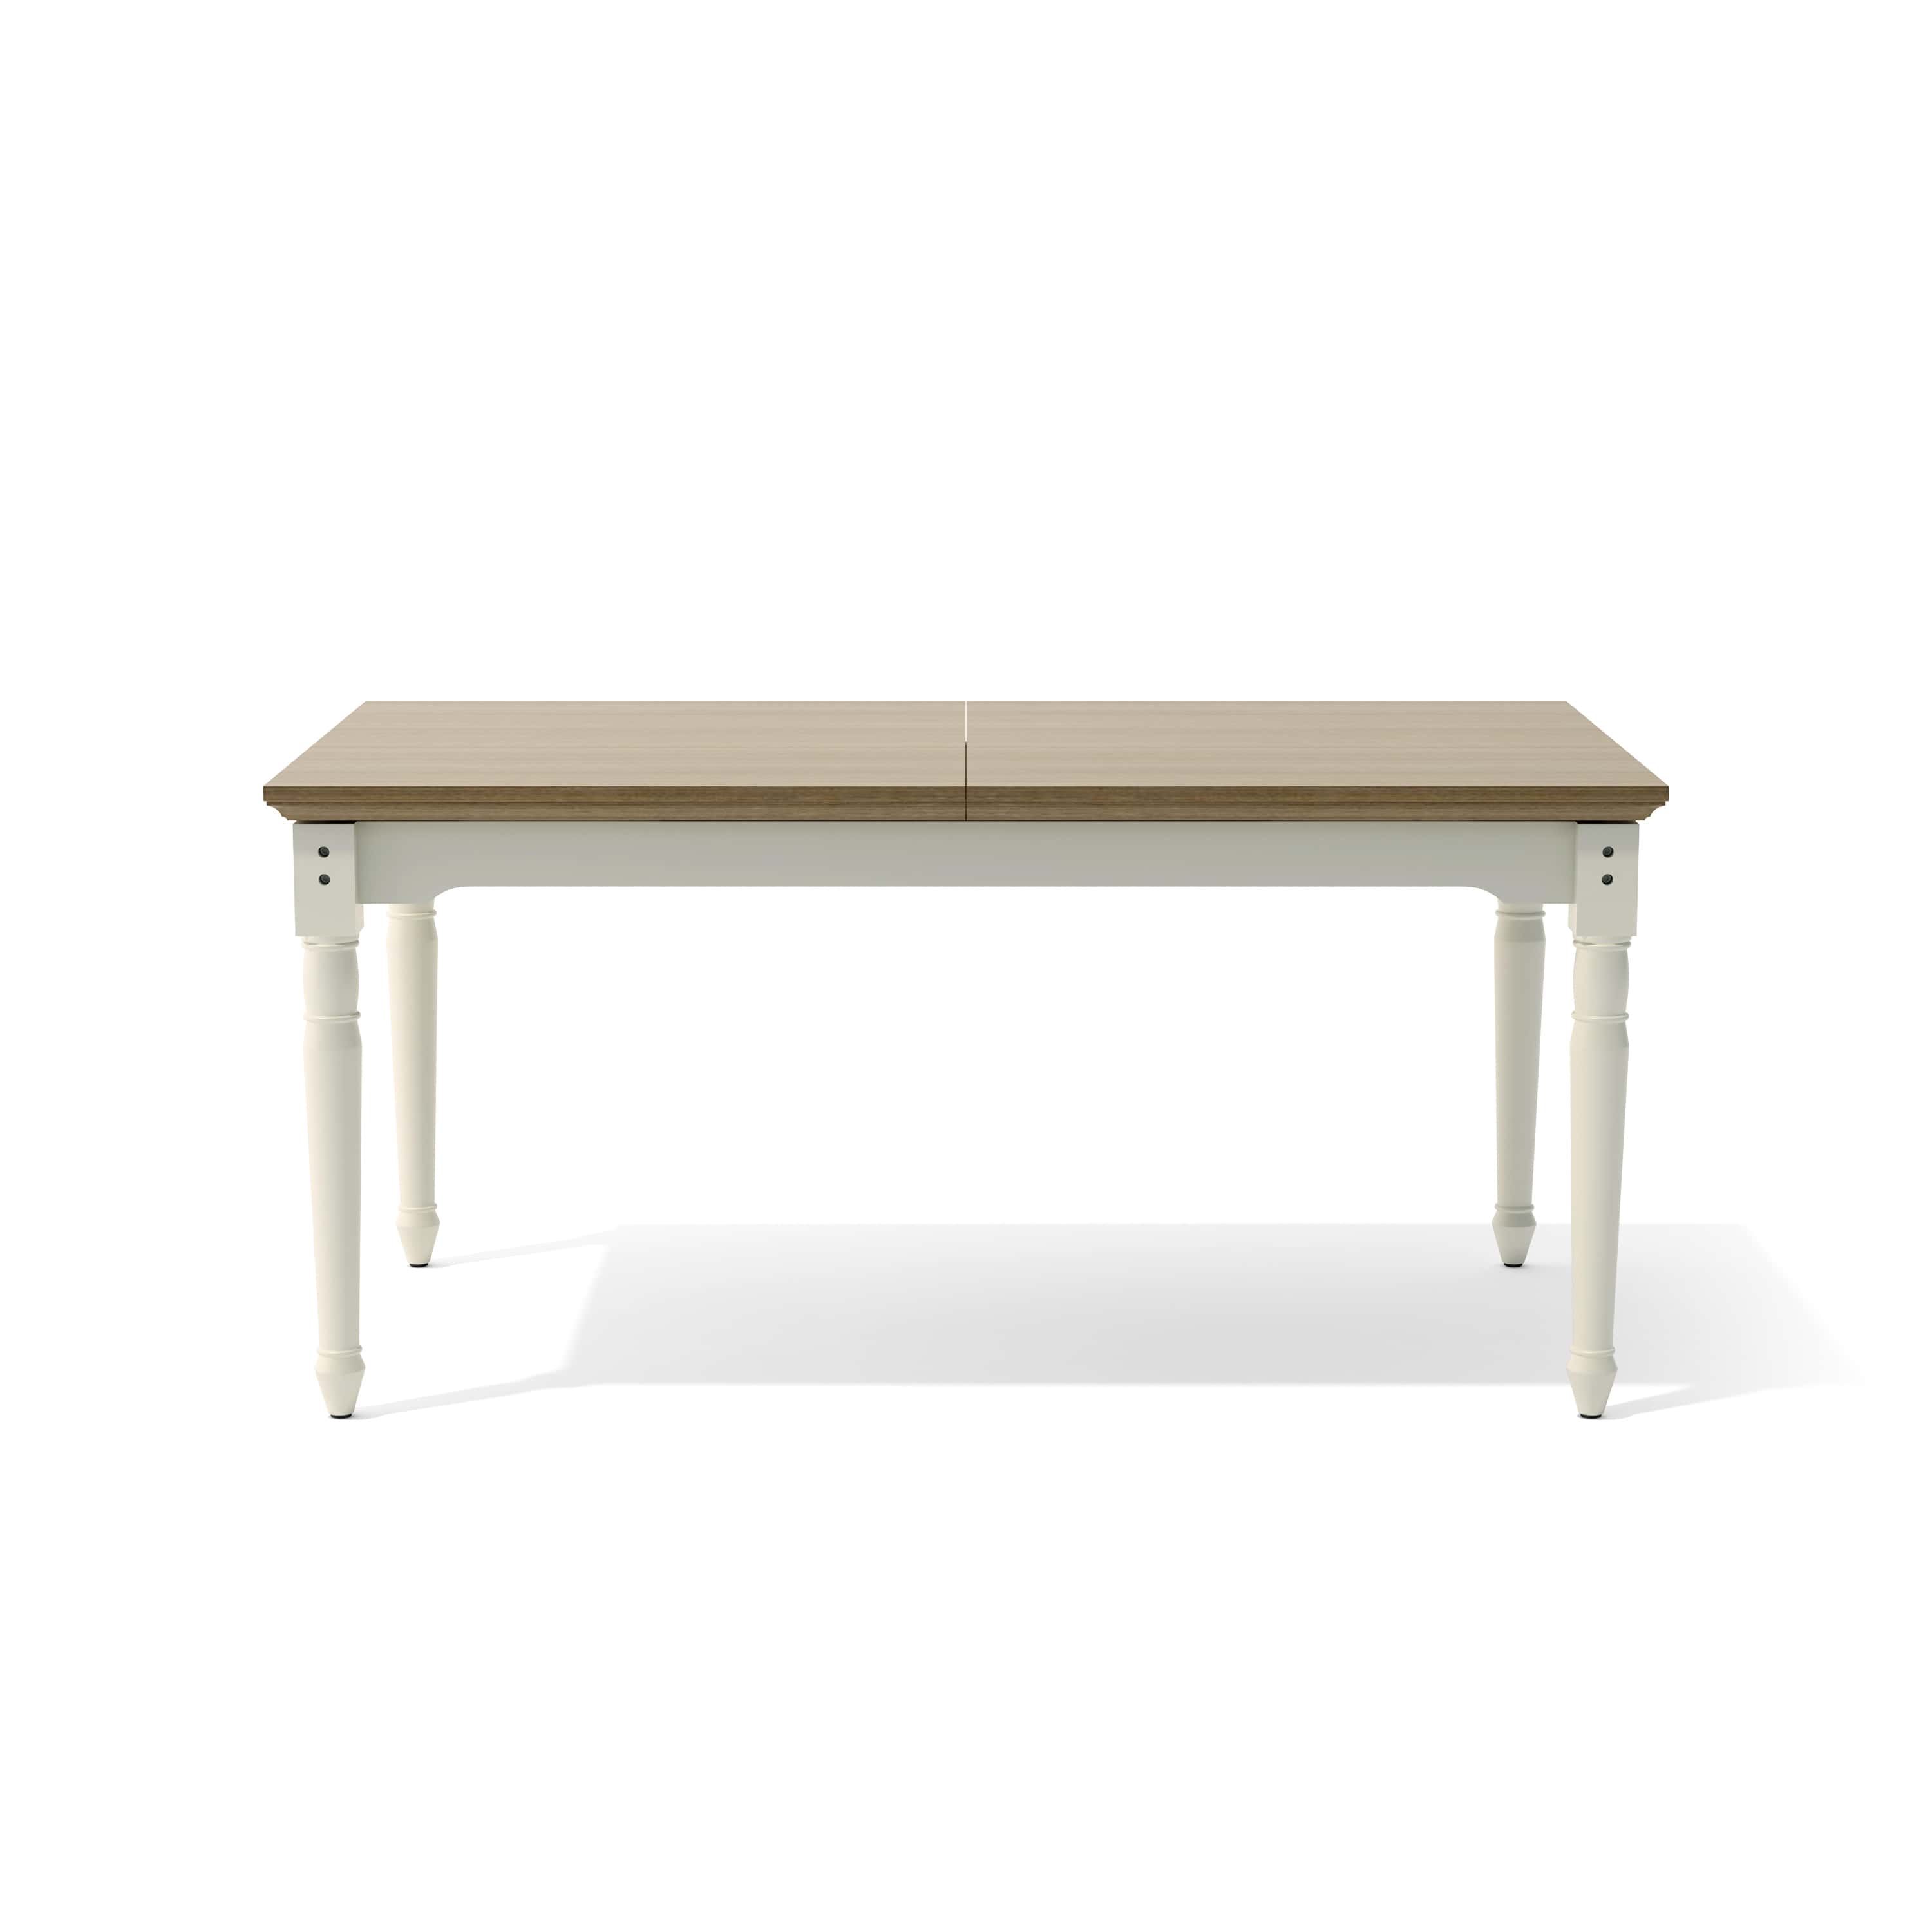 Anderson teak extendable kitchen table